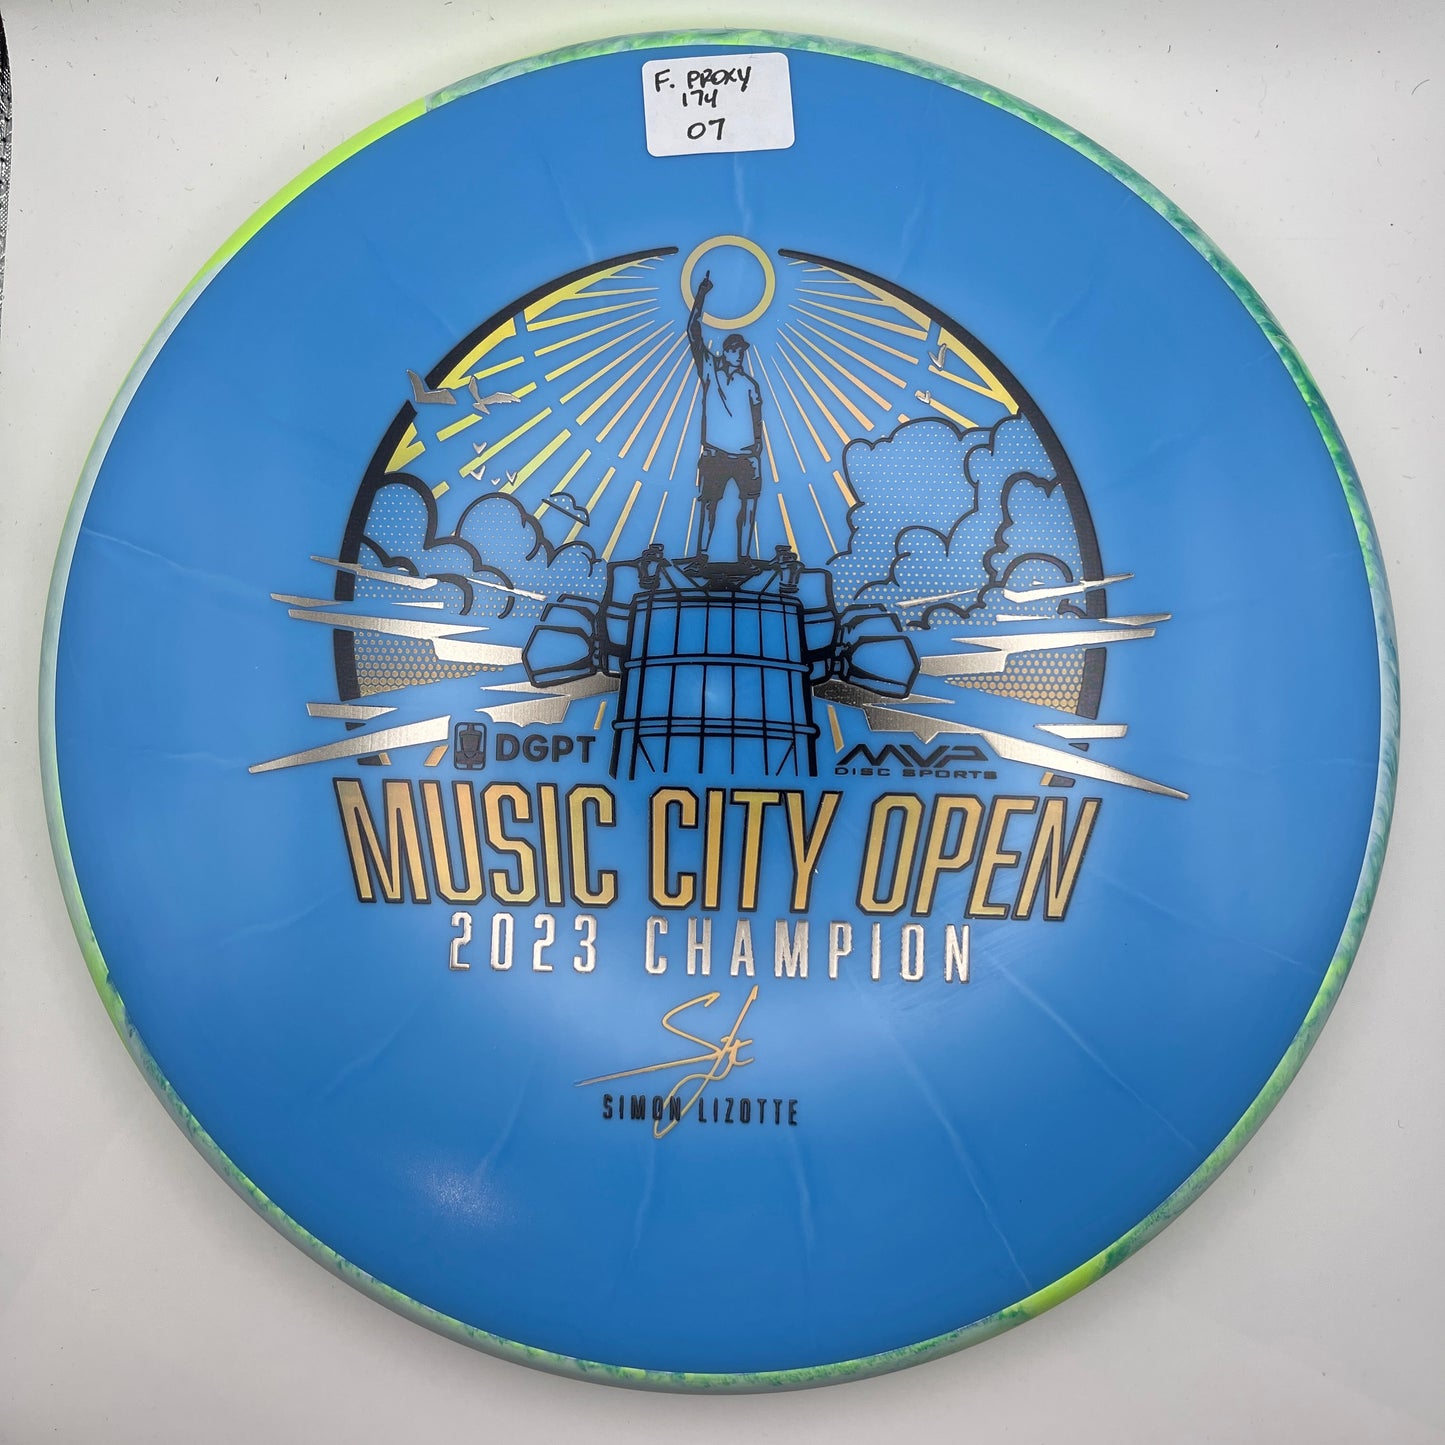 Fission Proxy - Music City Open/Simon Lizotte